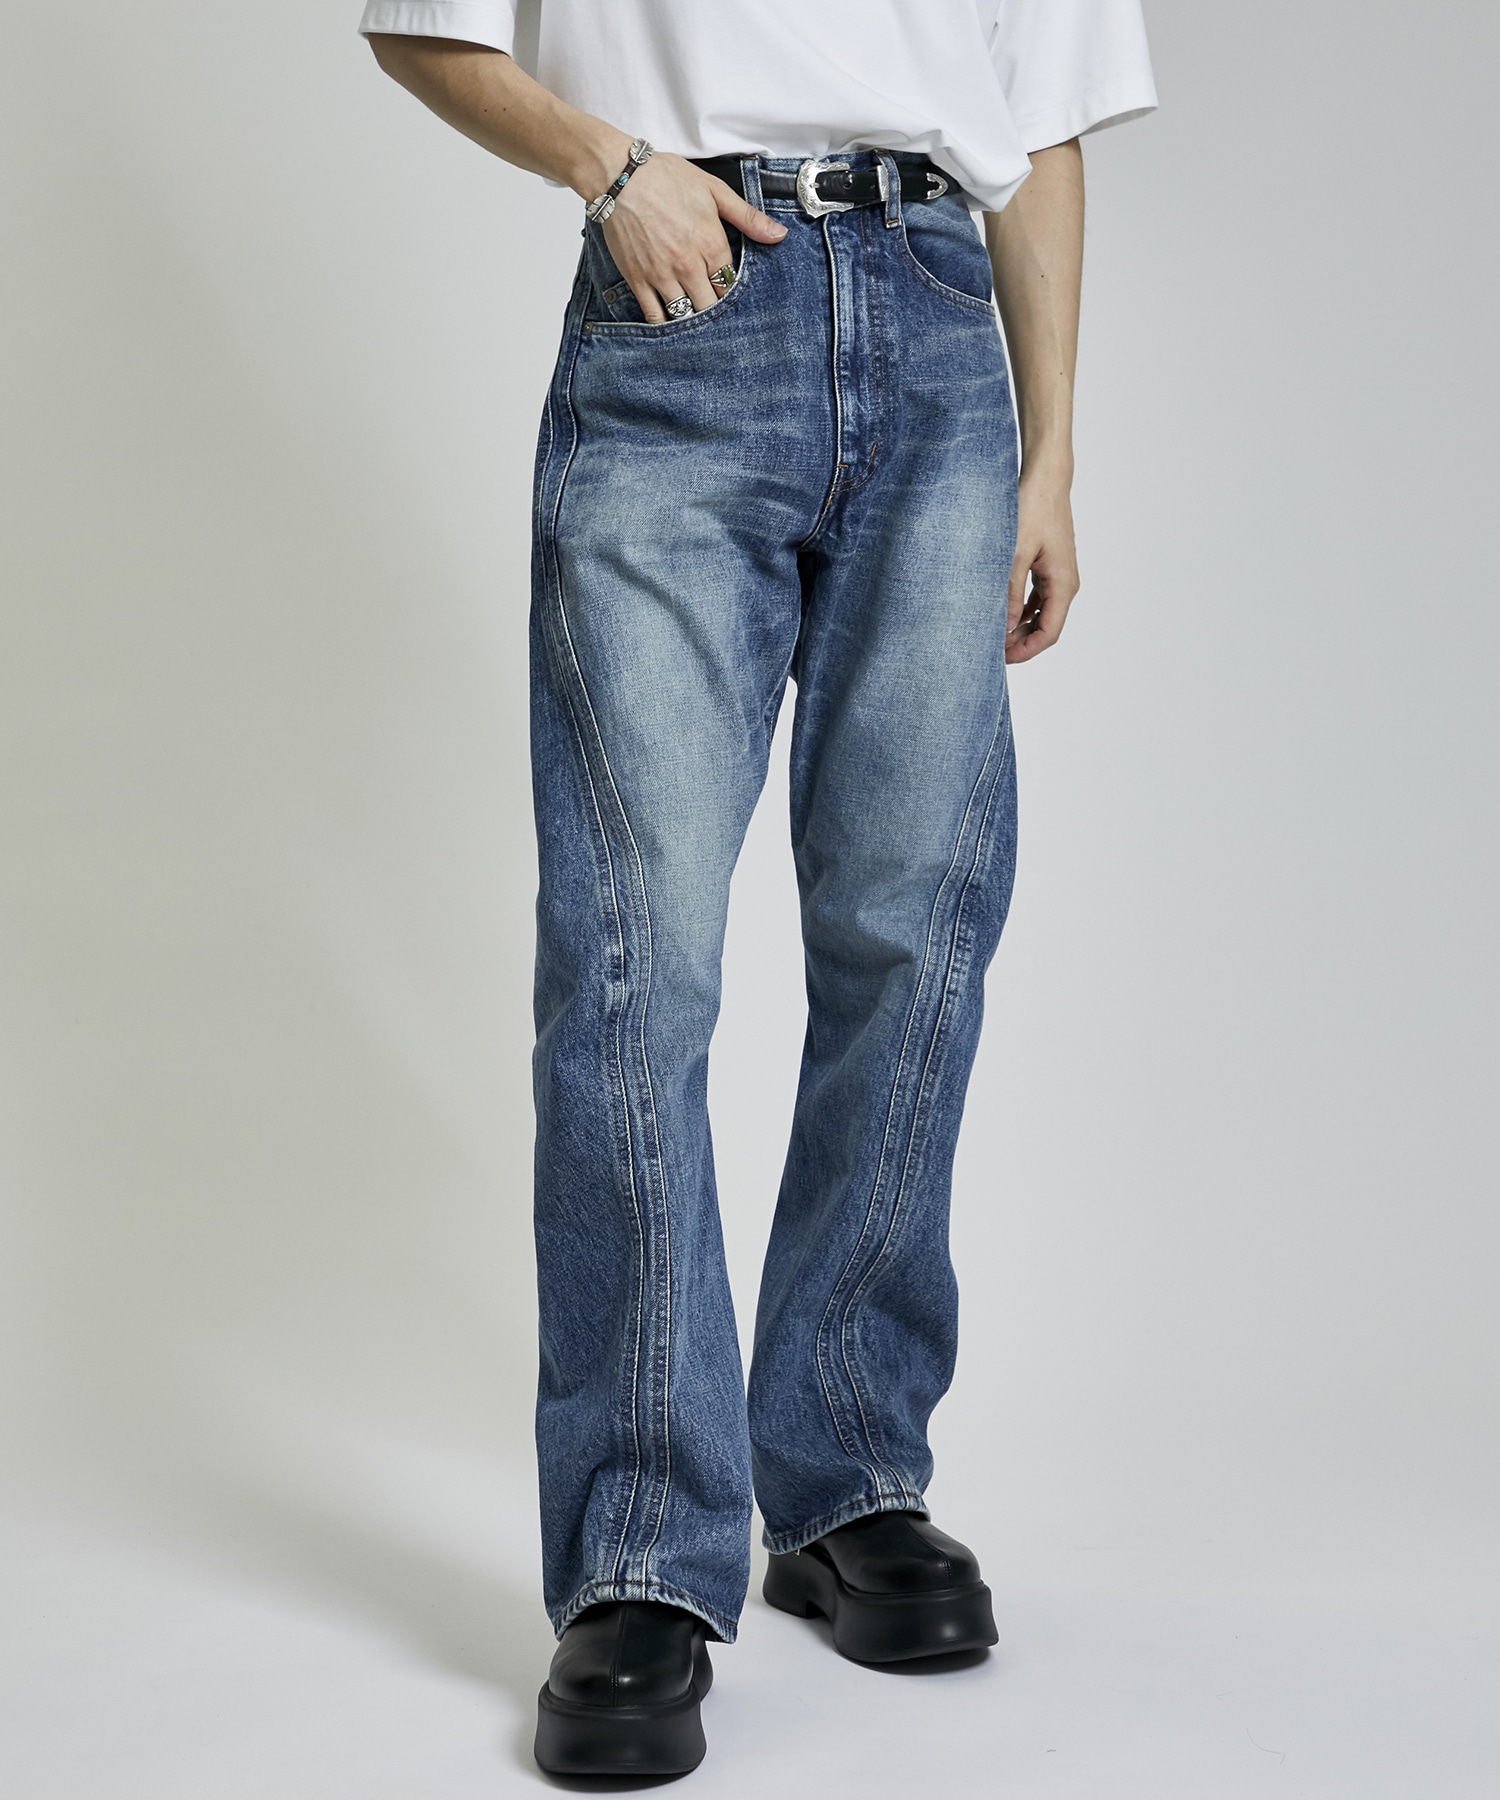 NVRFRGT 3D Twisted Jeans 22ss 新品未使用 パンツ デニム/ジーンズ